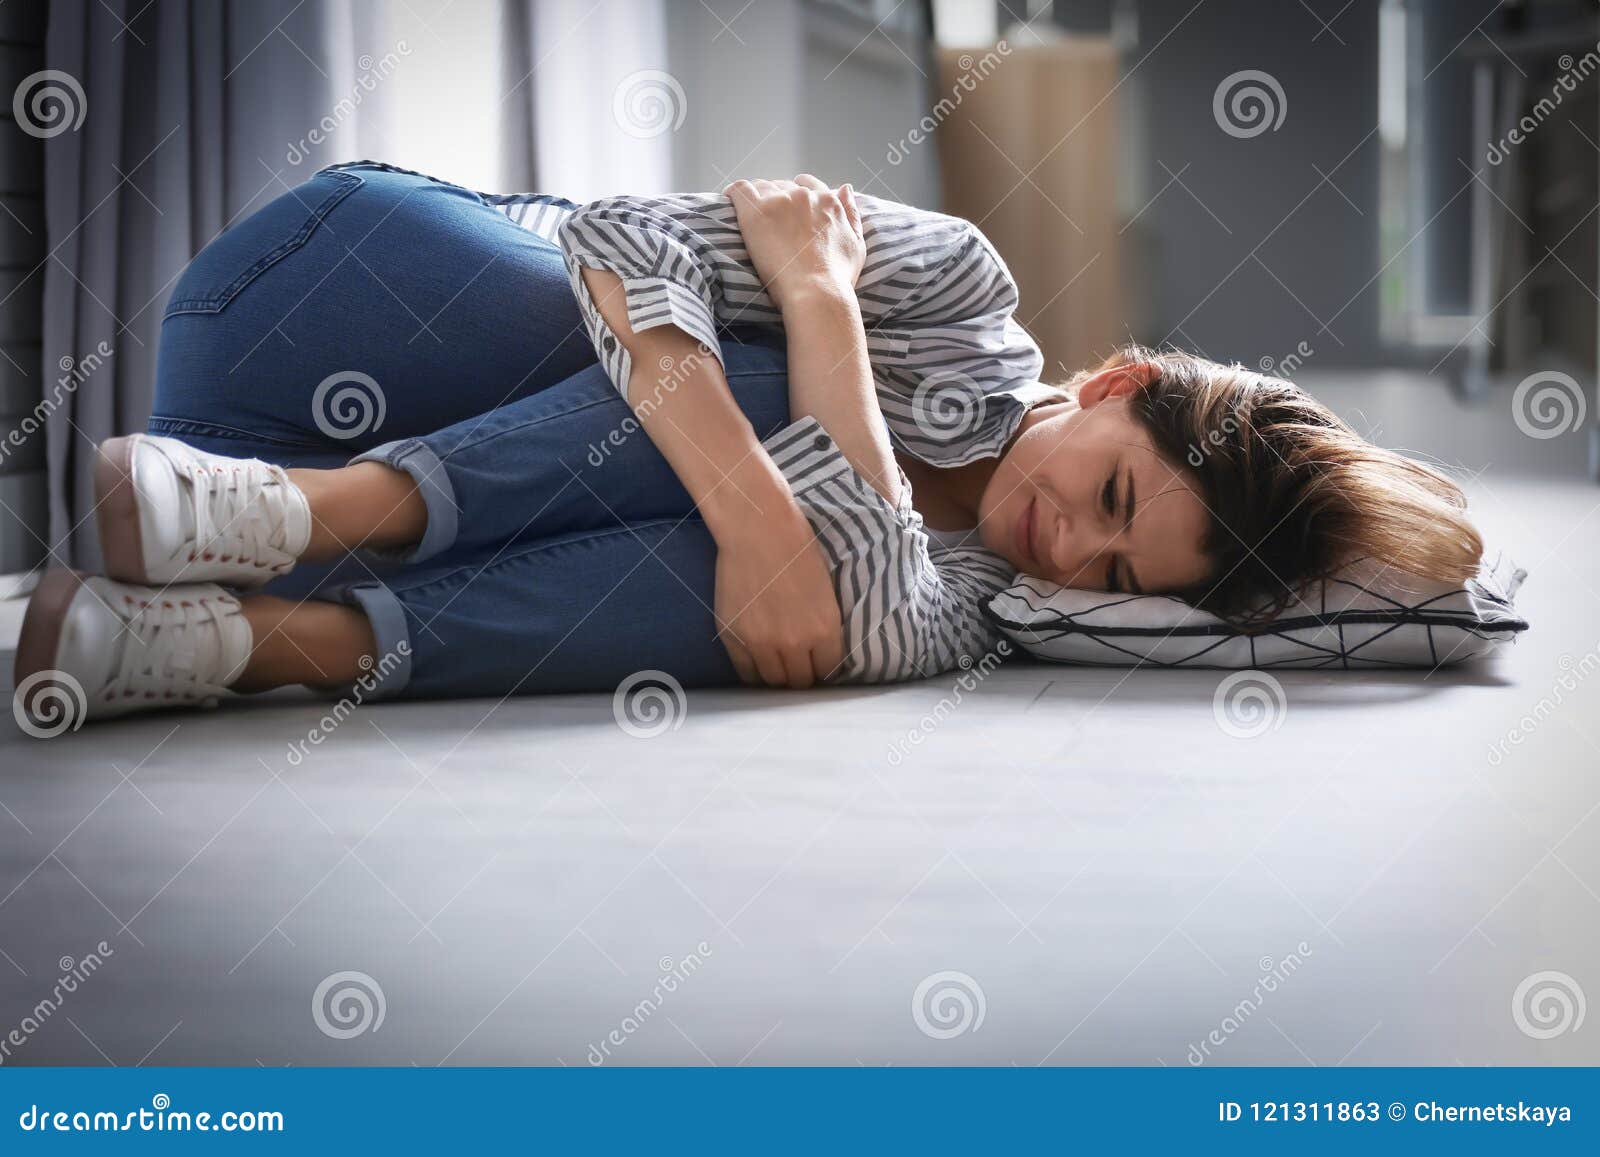 Сильно ее лежа. Девушка лежит на полу и плачет. Девушка плачет в подушку. Девушка плачет лежа на полу.